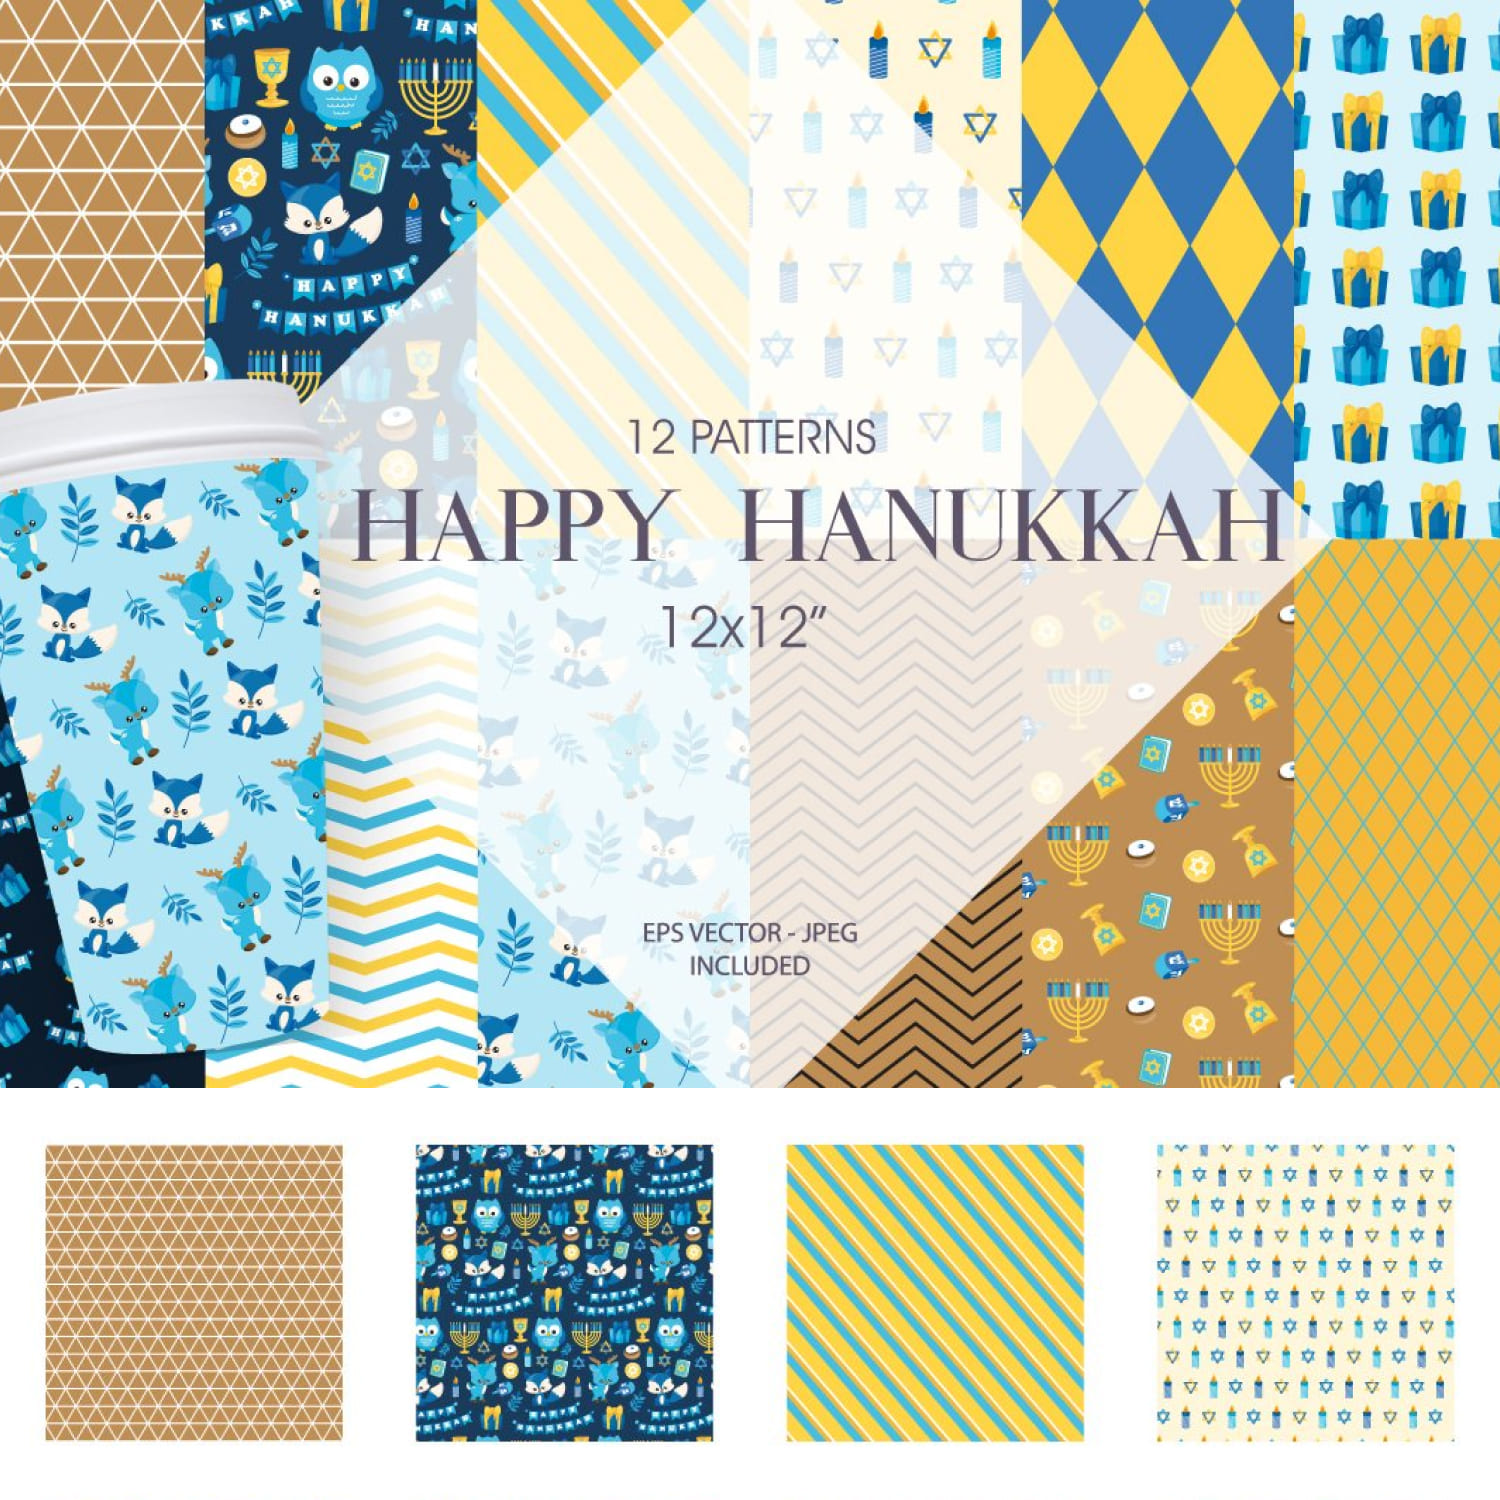 Prints of happy hanukkah papers graphic illustration.